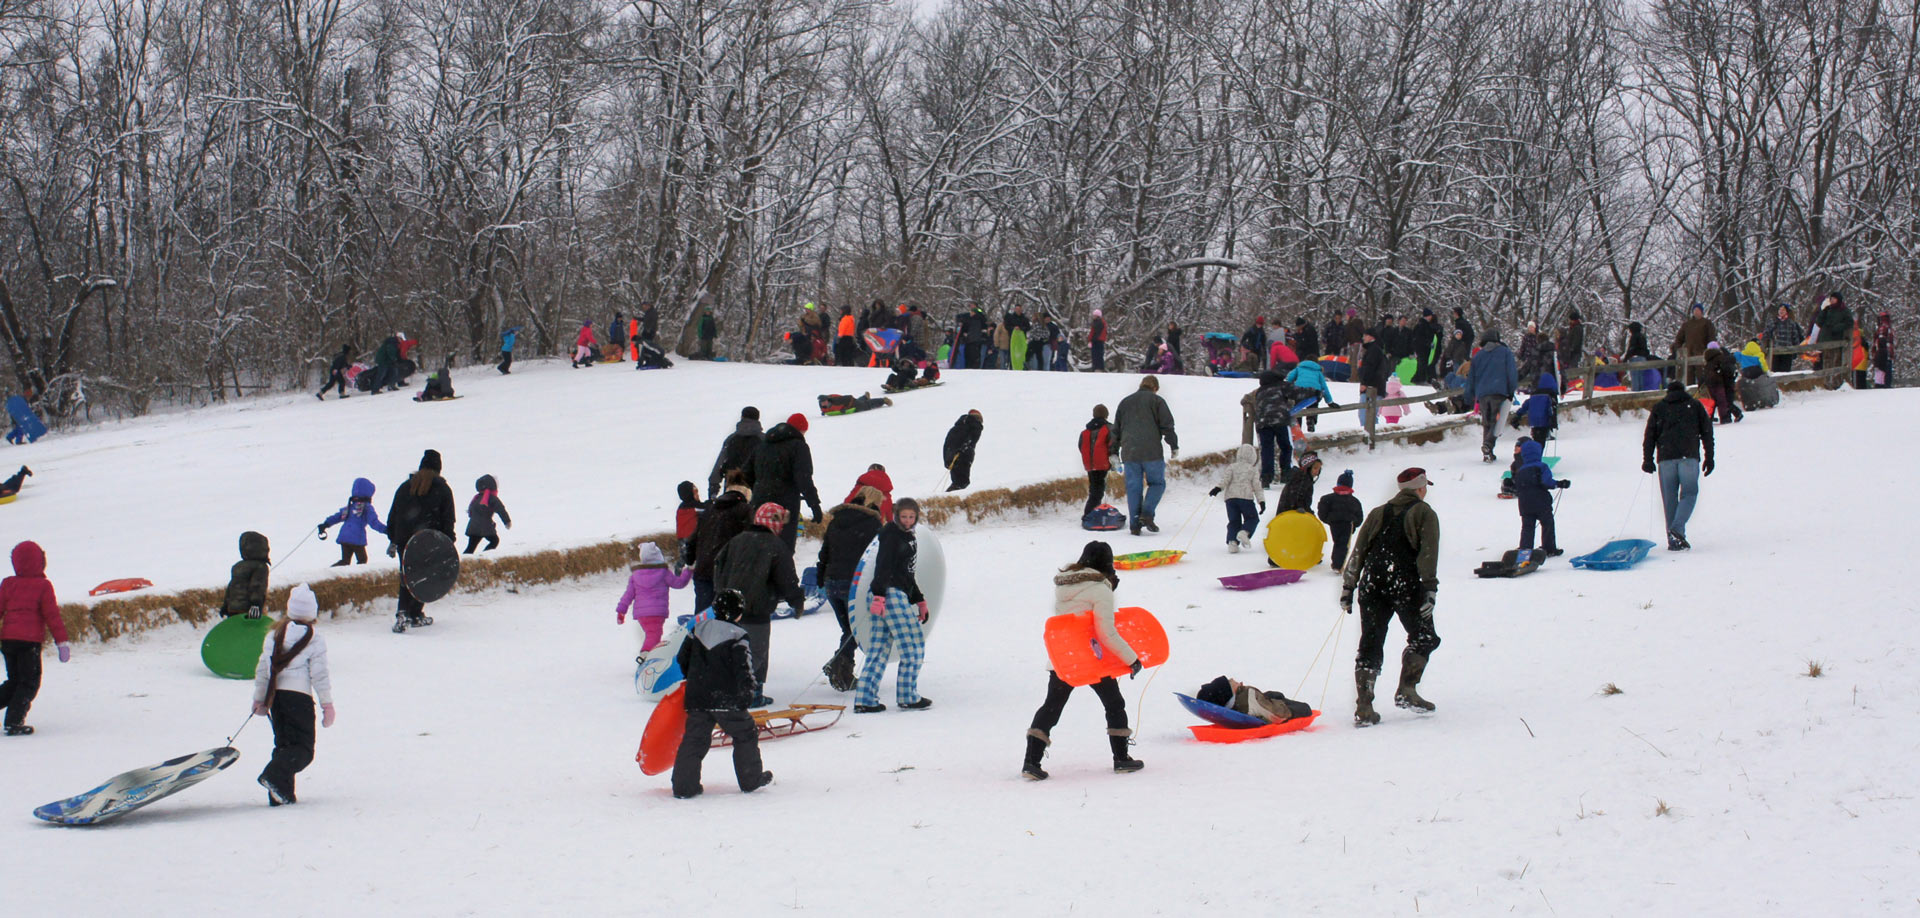 winter fun starts at metro parks - metro parks - central